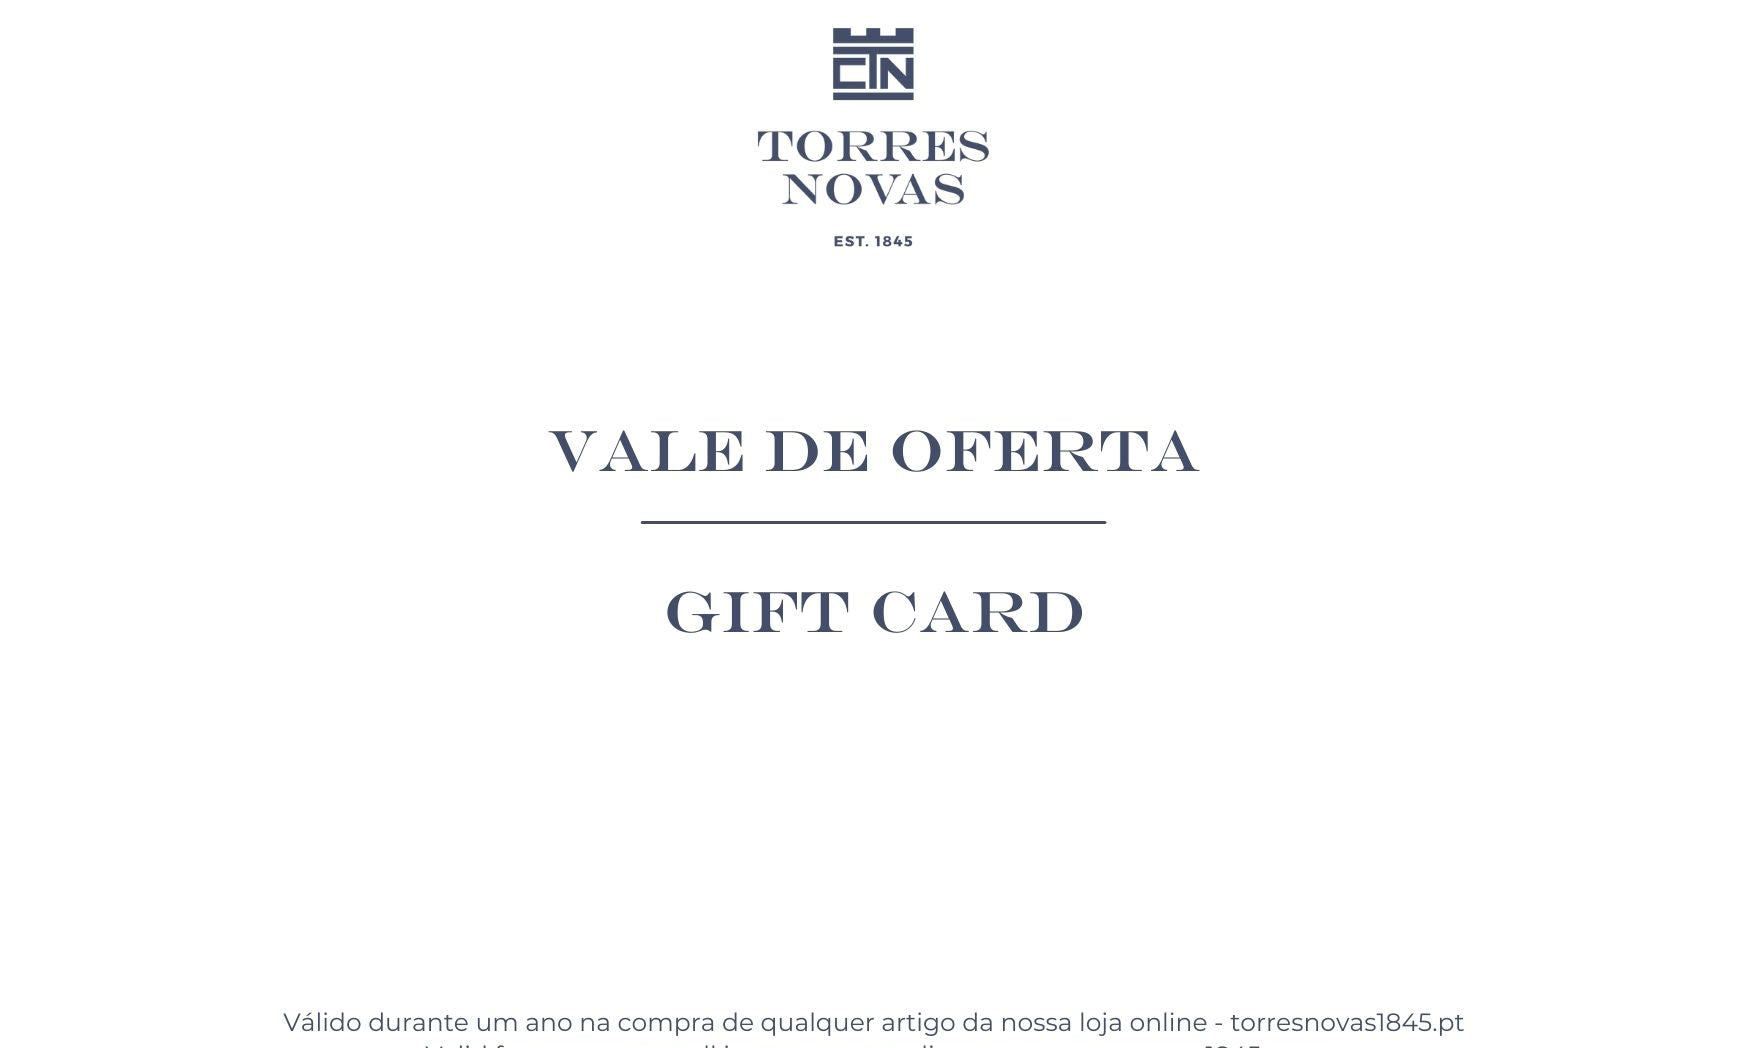 Torres Novas gift card - Torres Novas